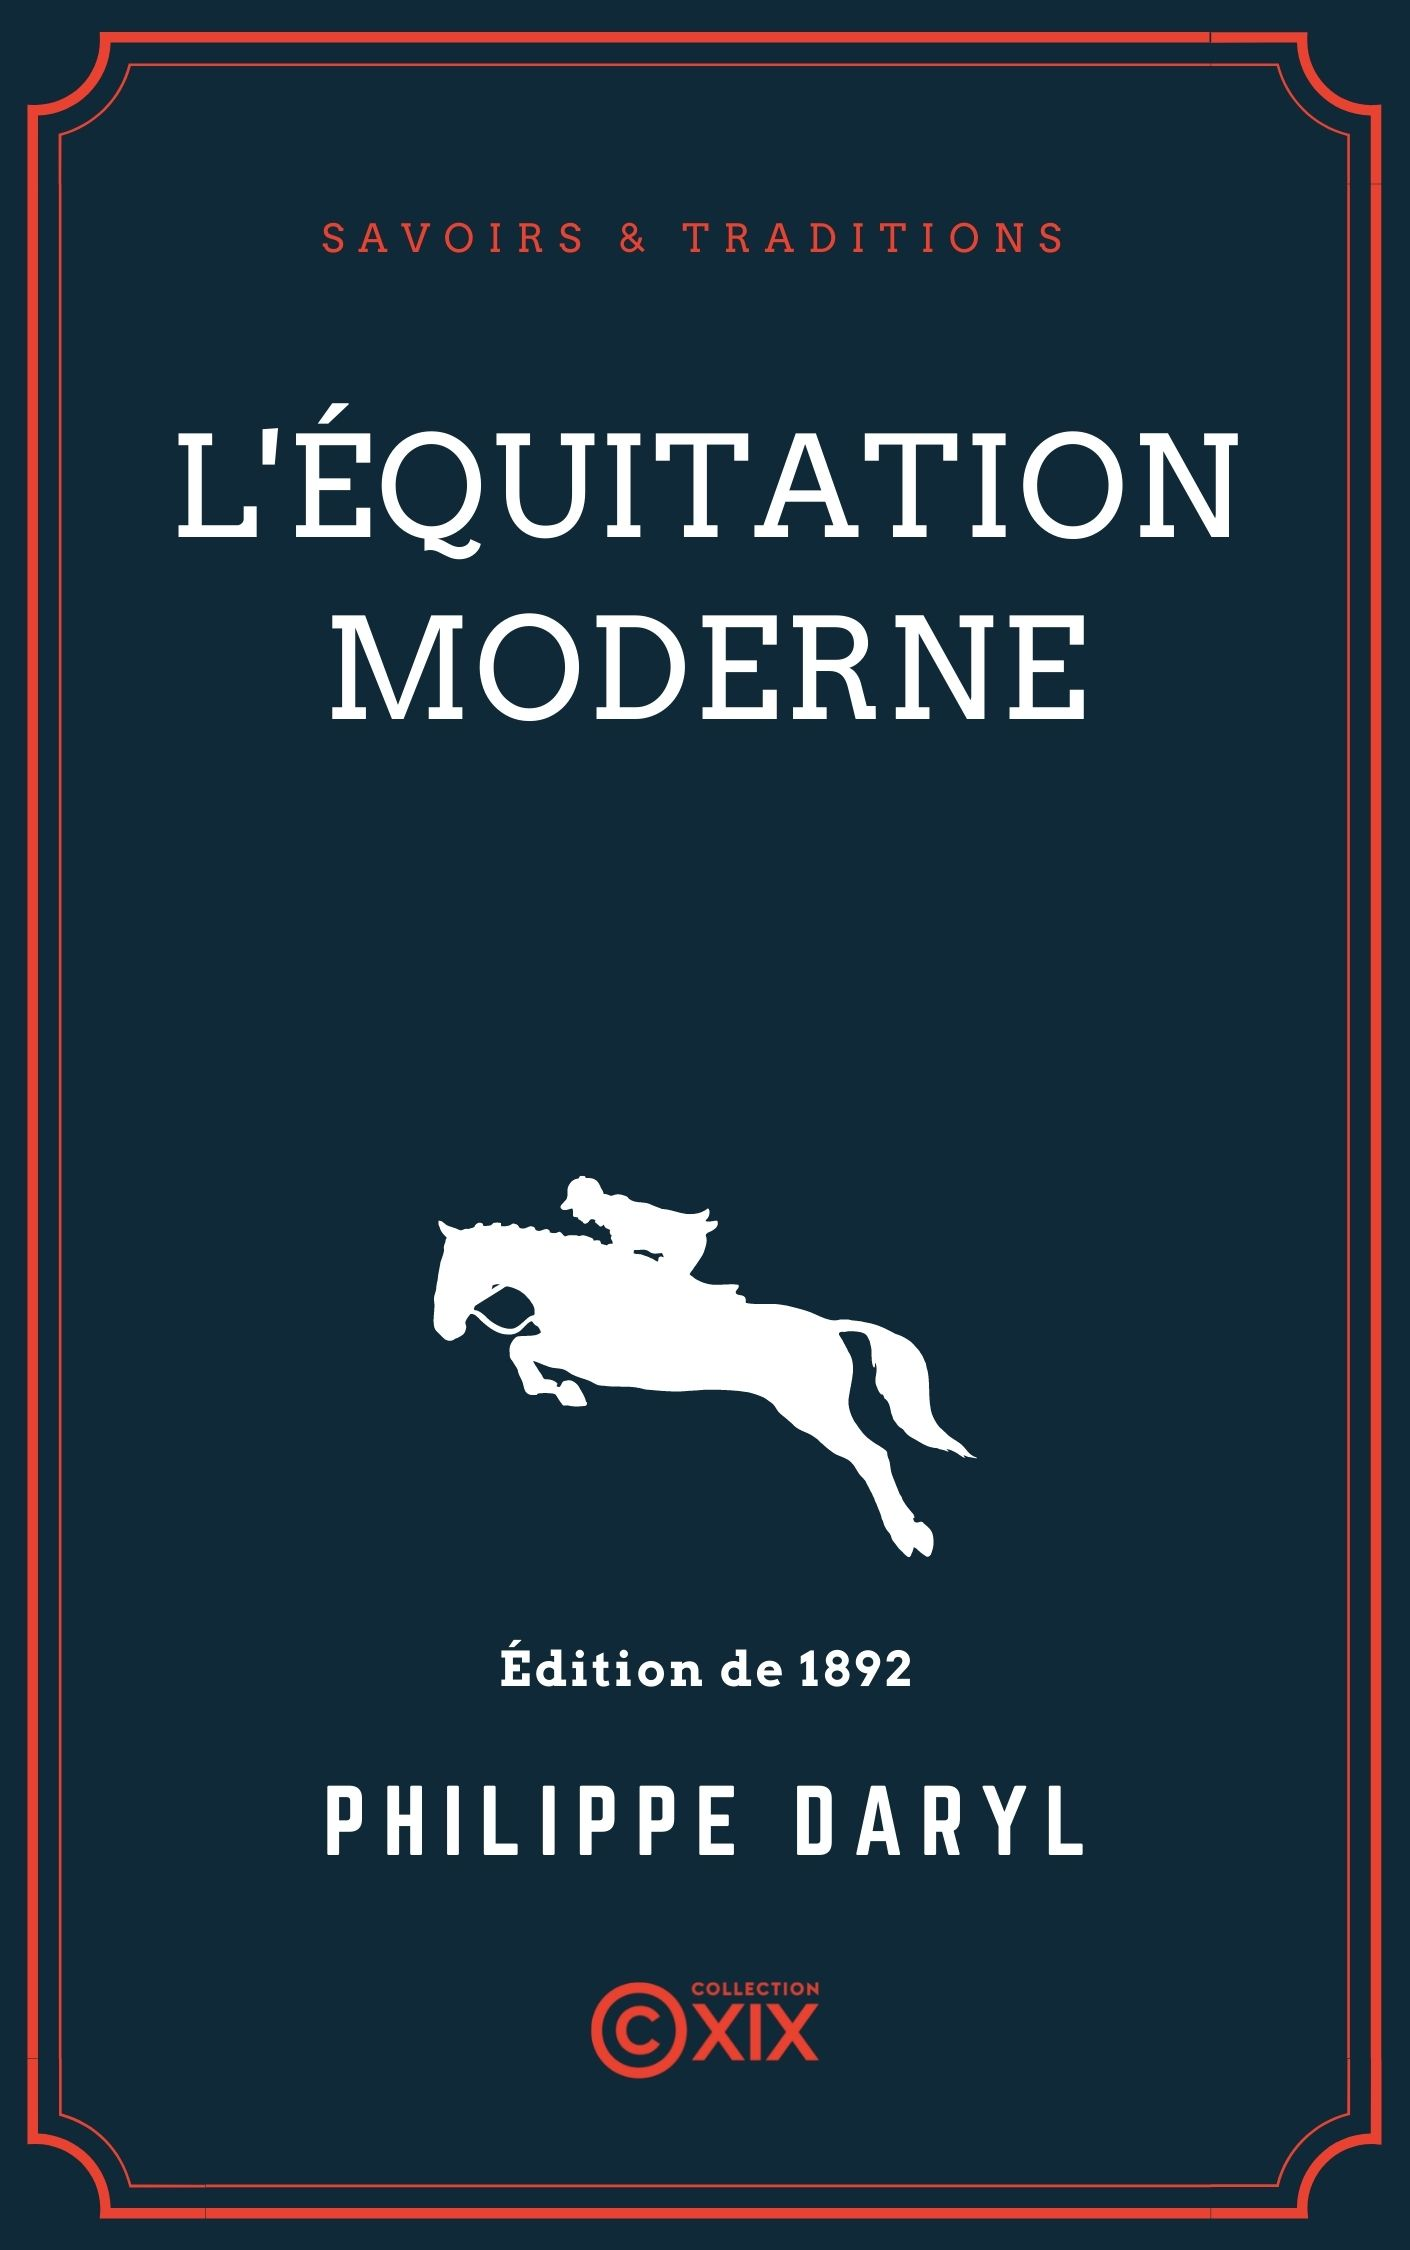 Ebook L'Équitation moderne par Philippe Daryl - 7Switch